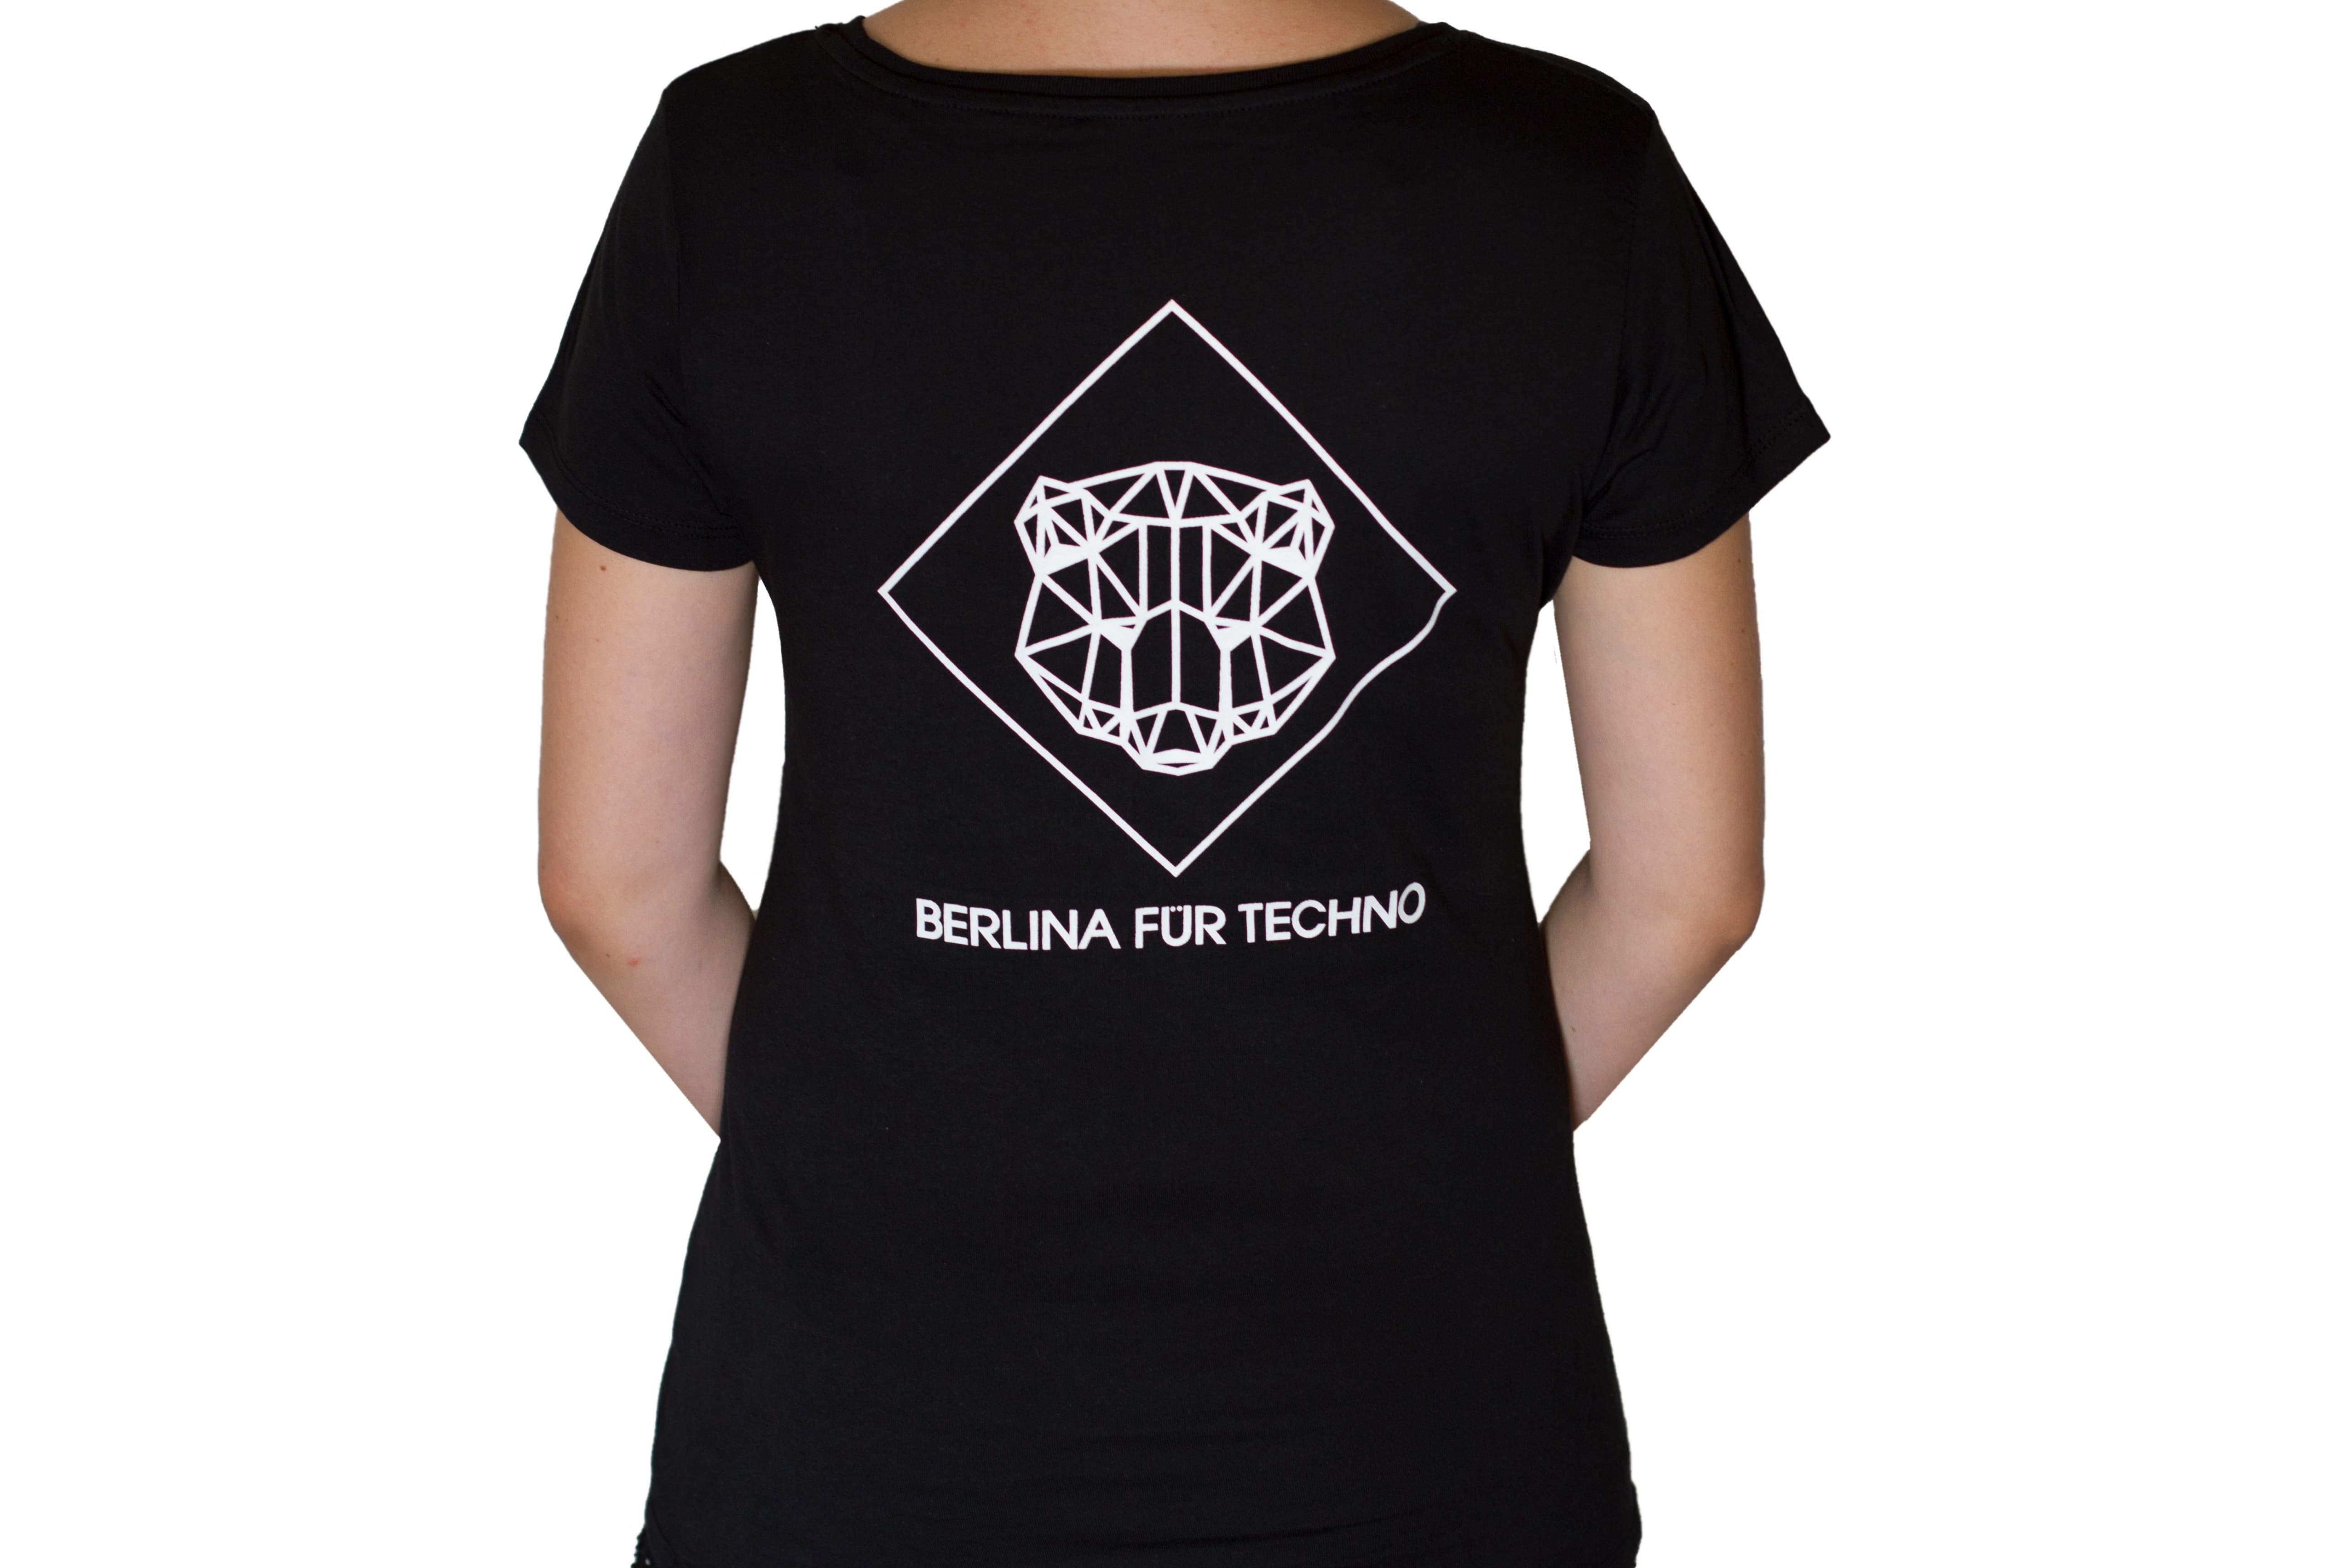 T-Shirt - "BerlinaFürTechno"